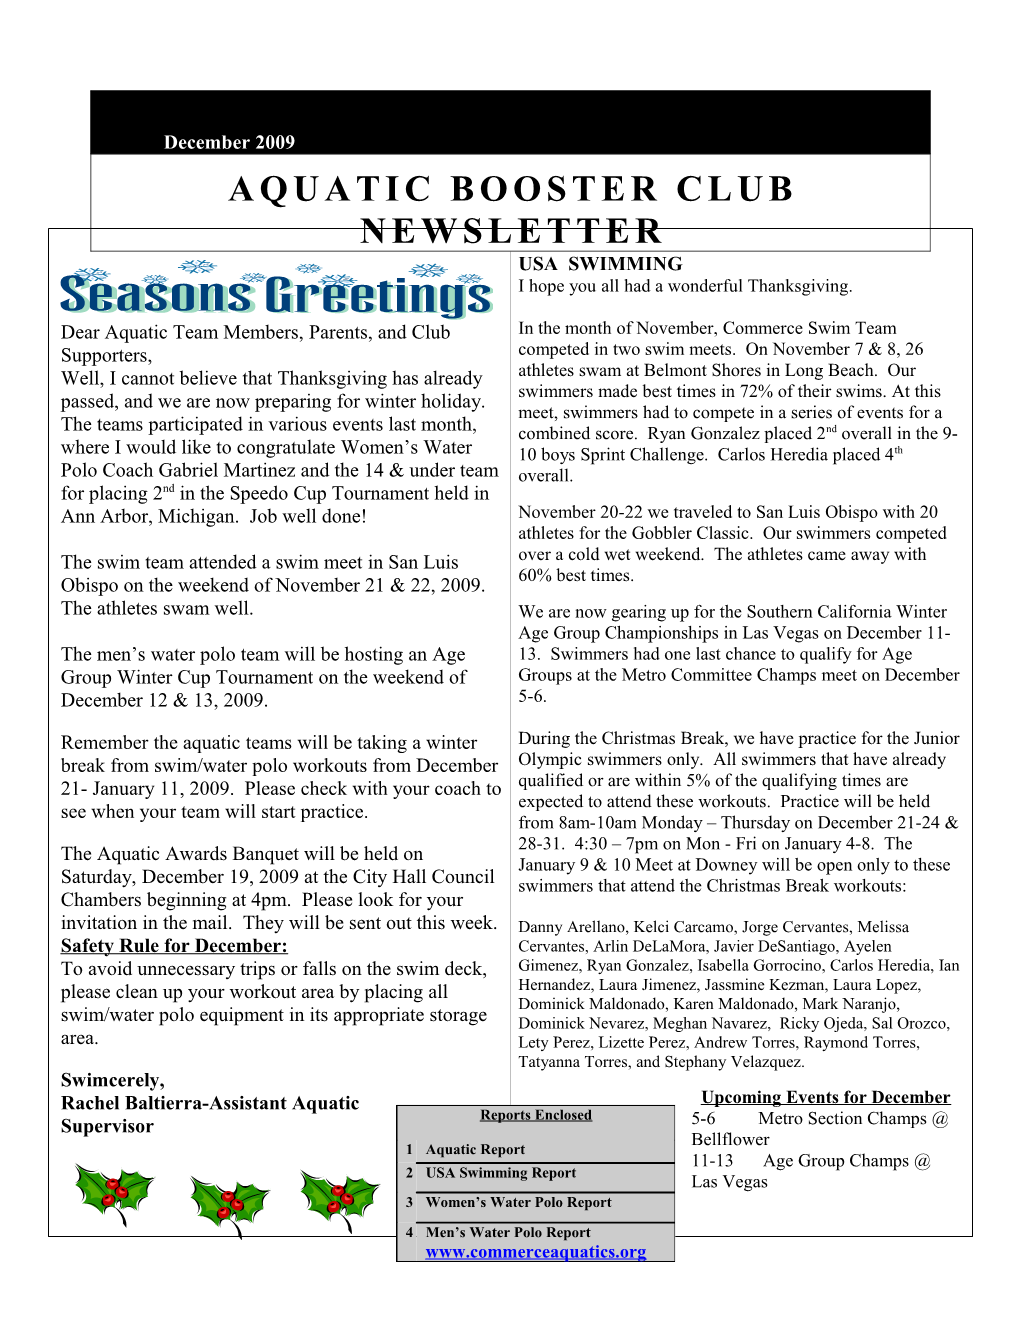 Aquatic Booster Club Newsletter